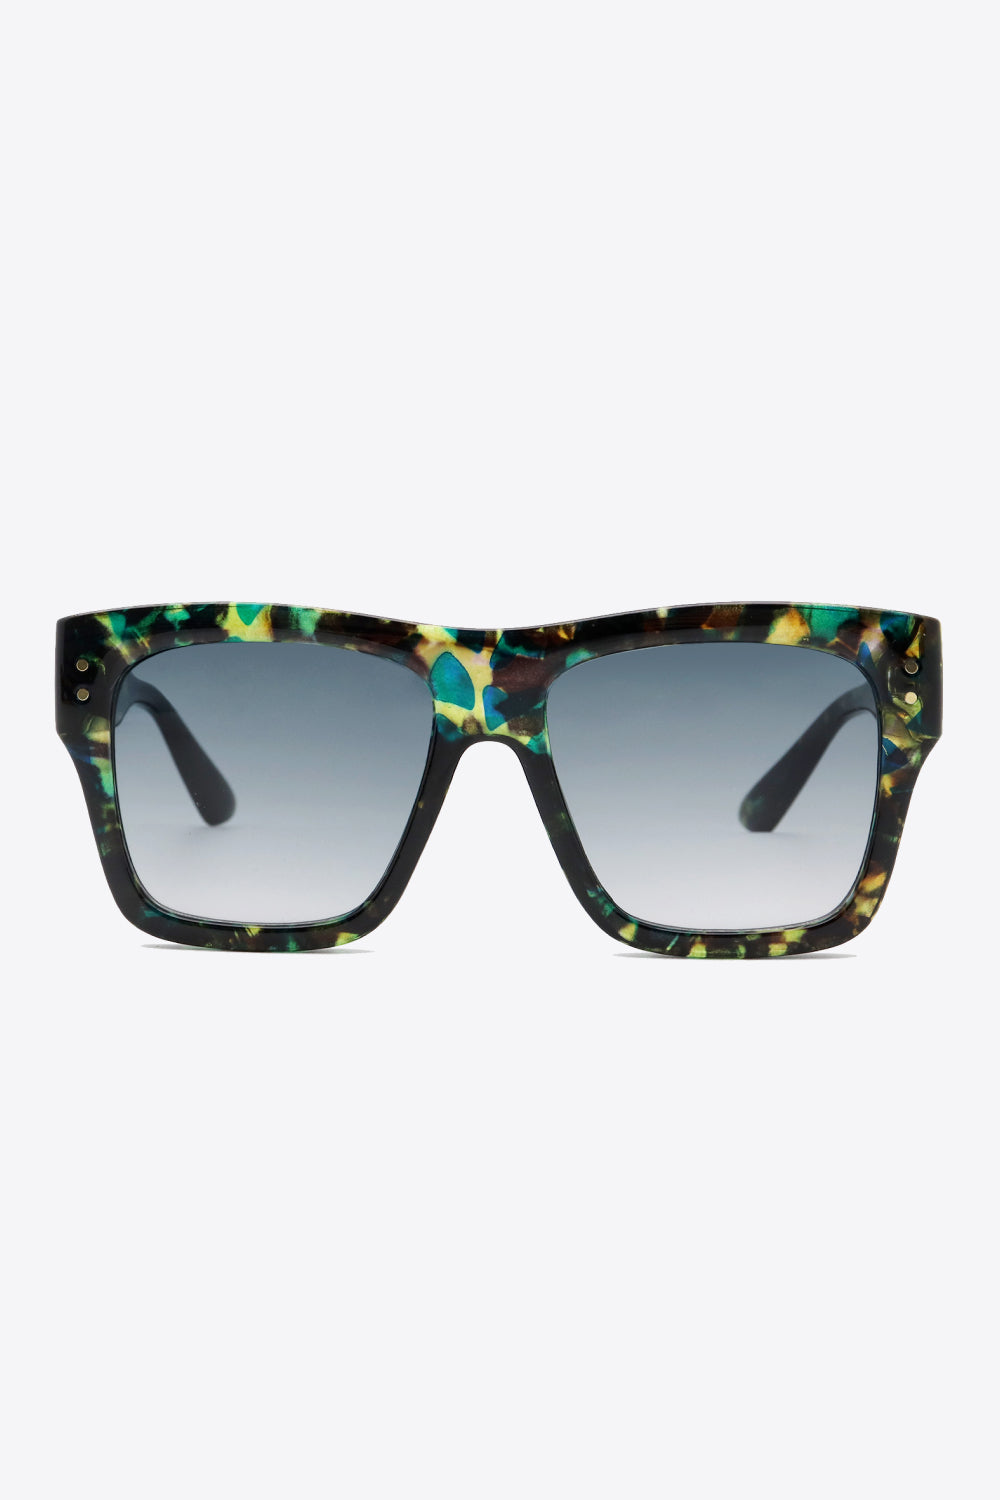 UV400 Patterned Polycarbonate Square Sunglasses - Tigbul's Fashion